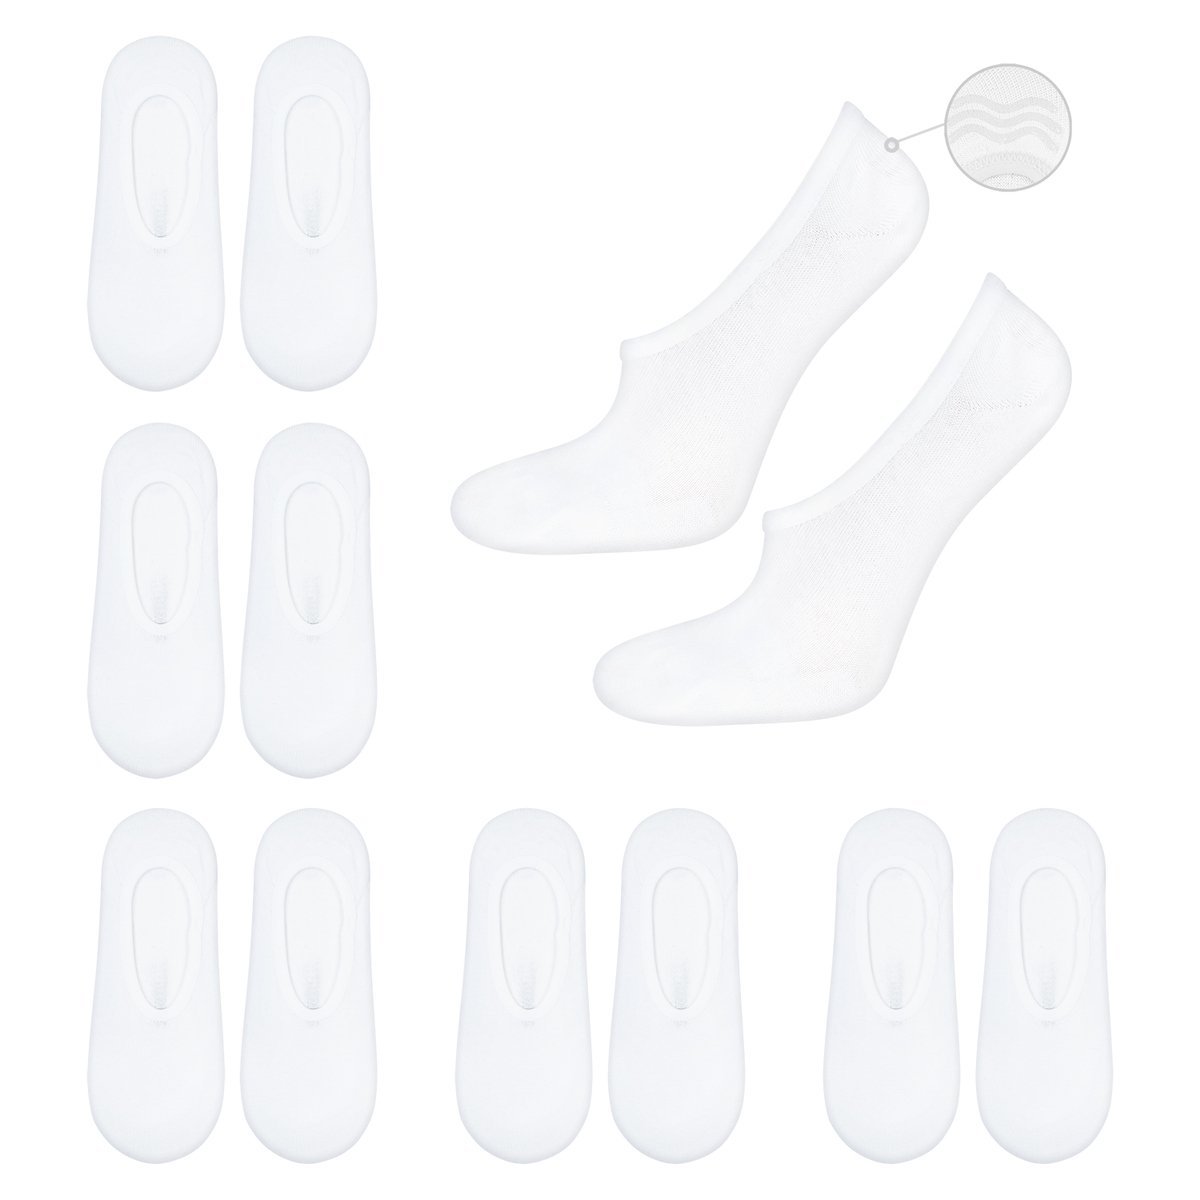 Set de 6x calcetines SOXO blancos hombre - 14,99 €